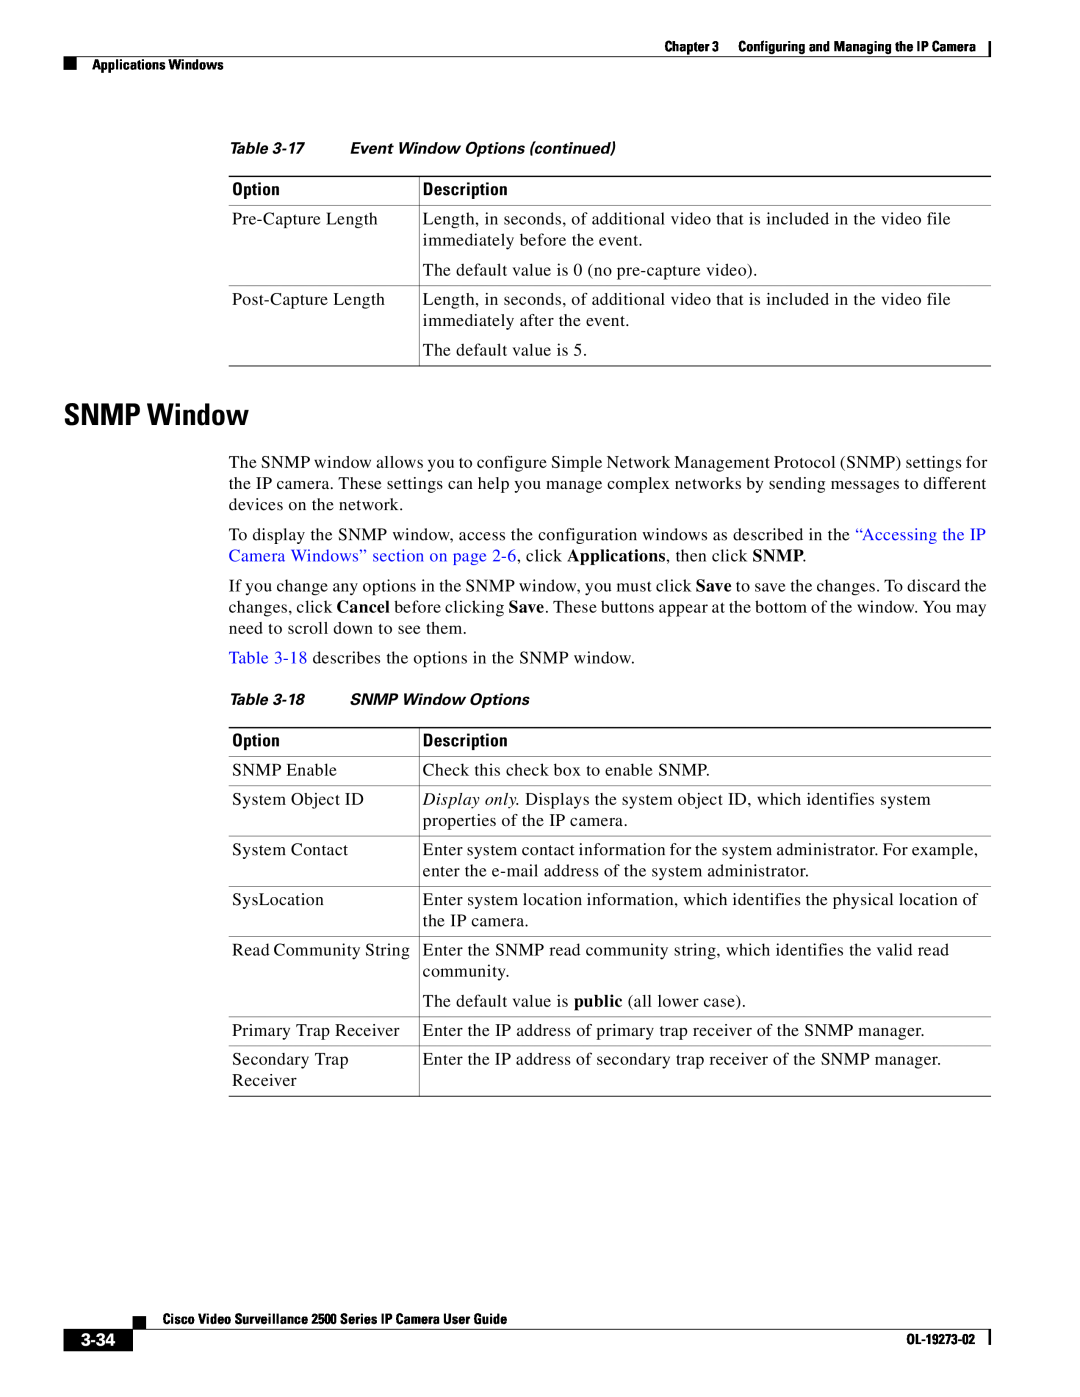 Cisco Systems 2500 Series, CIVS-IPC-2500 manual SNMP Window, 3-34, Option, Description 